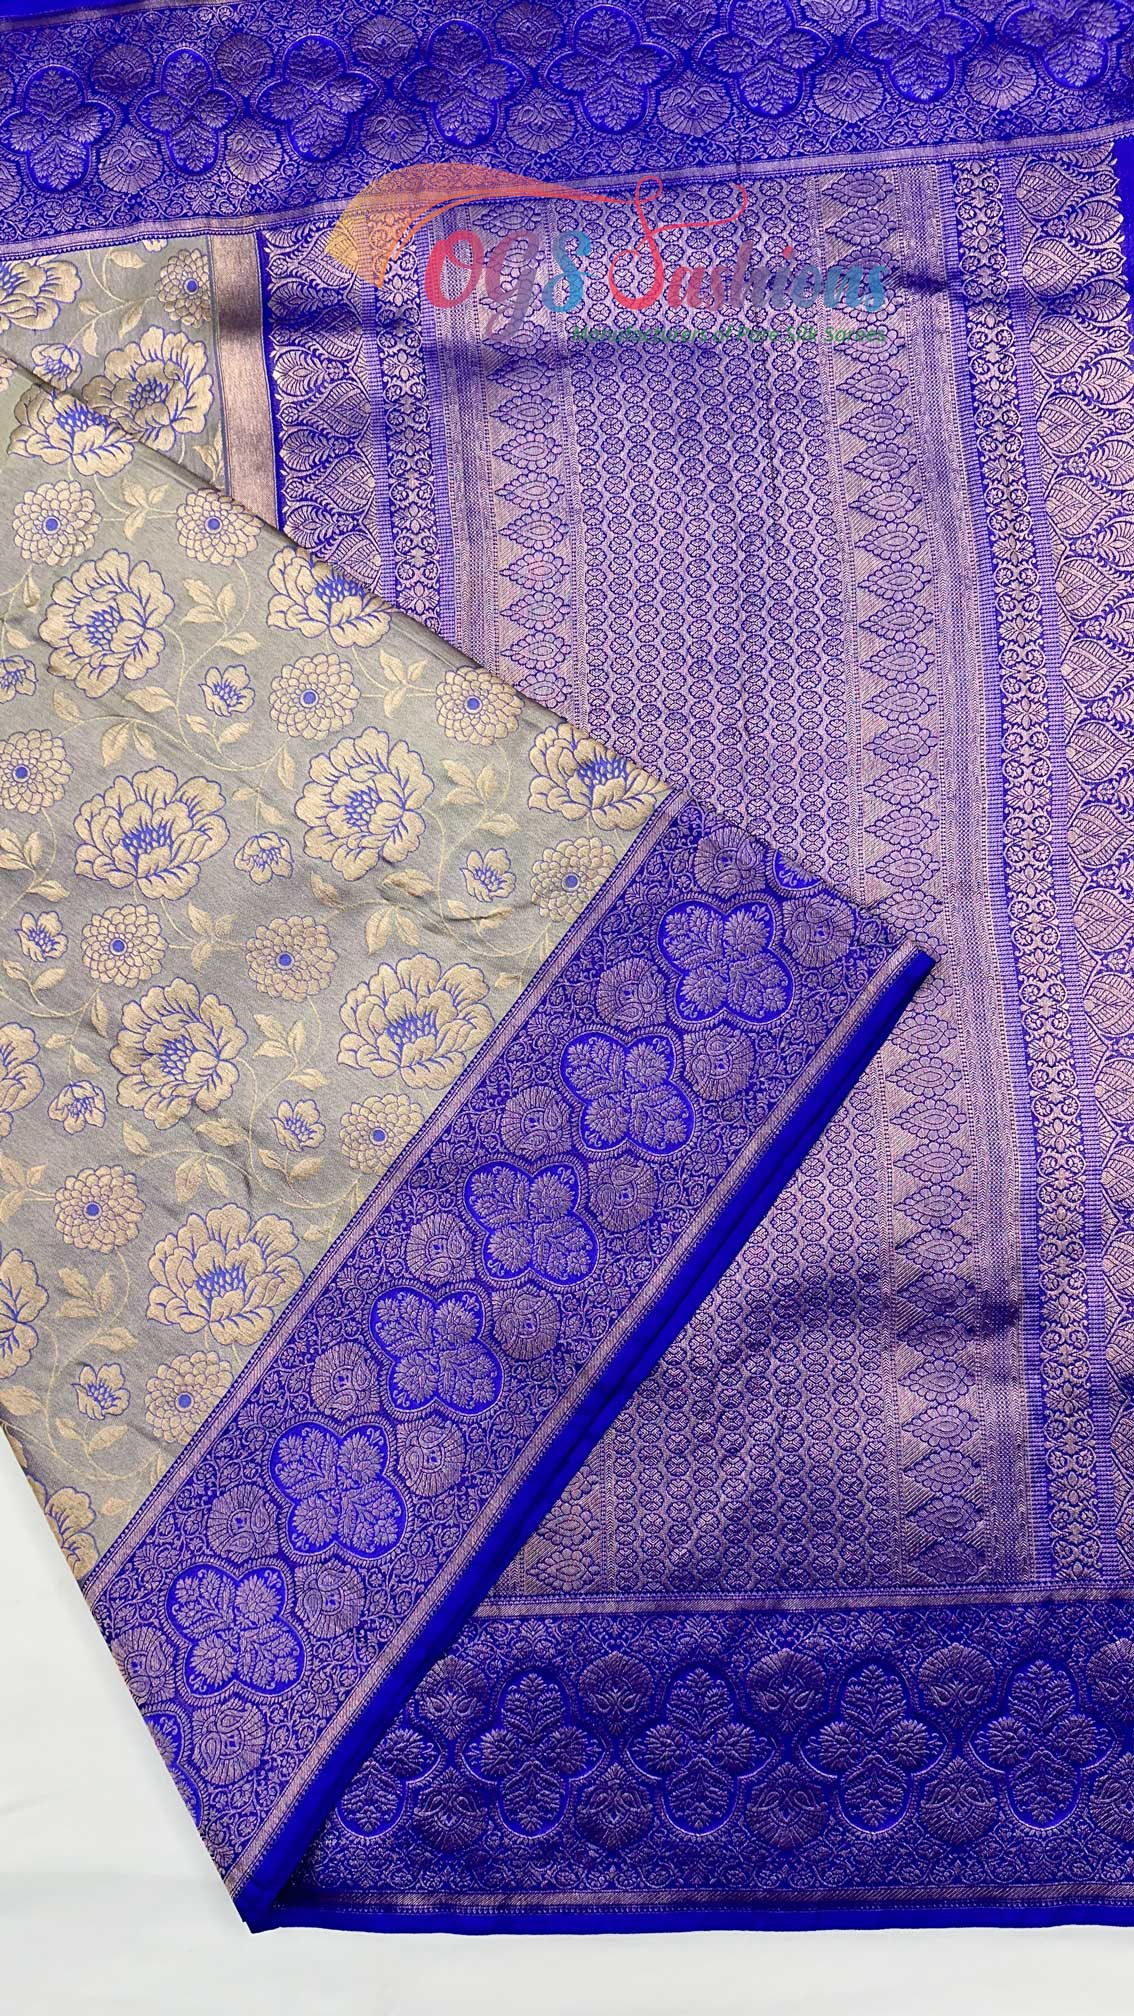 Kanchipuram Bridal Silk Saree with Grey Body with Indigo Blue Border, Pallu, Blouse